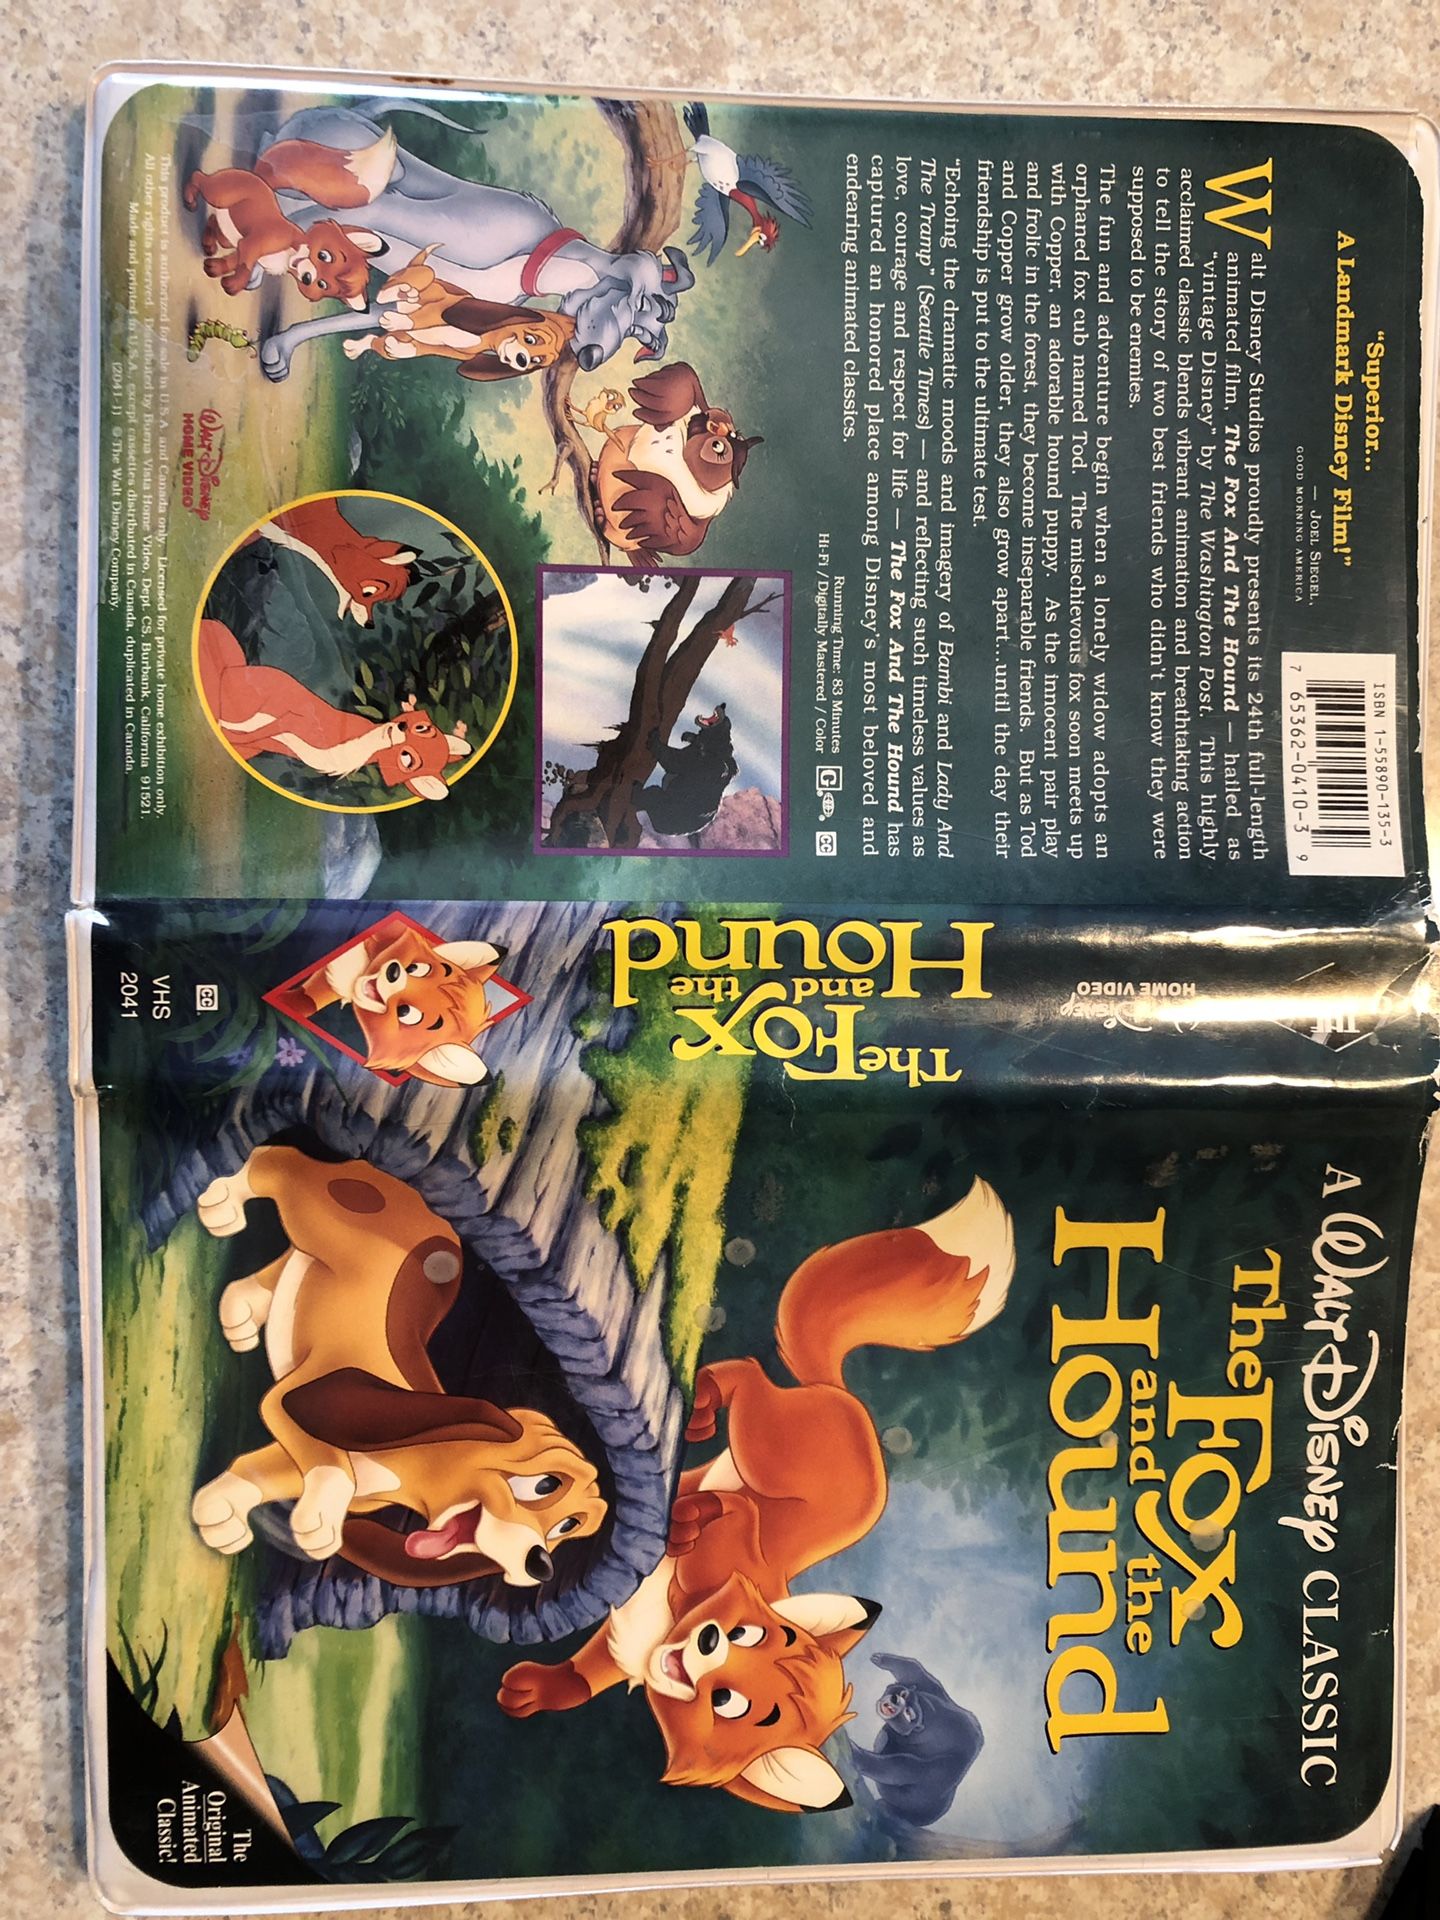 Rare Disney Classic VHS tape